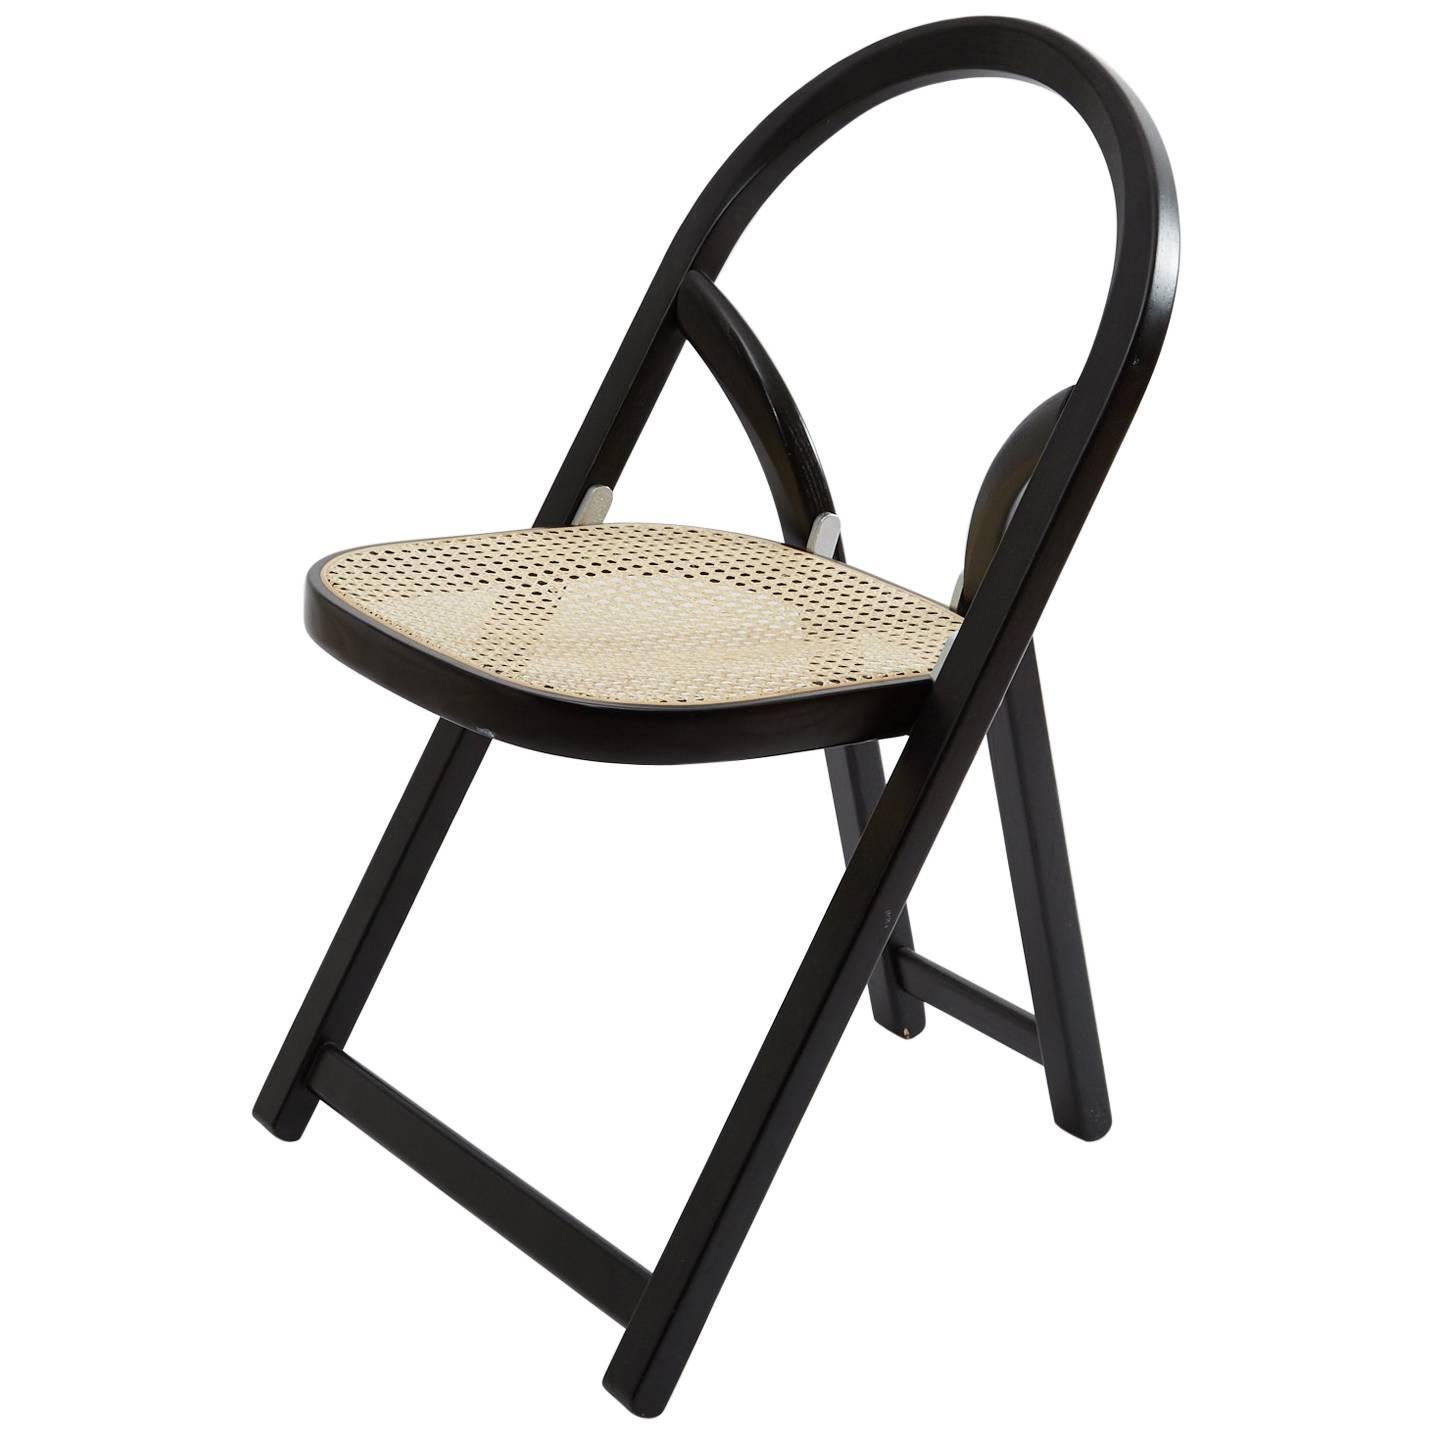 Gigi Sabadin Crassevig Arca Folding Chair in Black Wood and Natural Rattan, 1974 For Sale